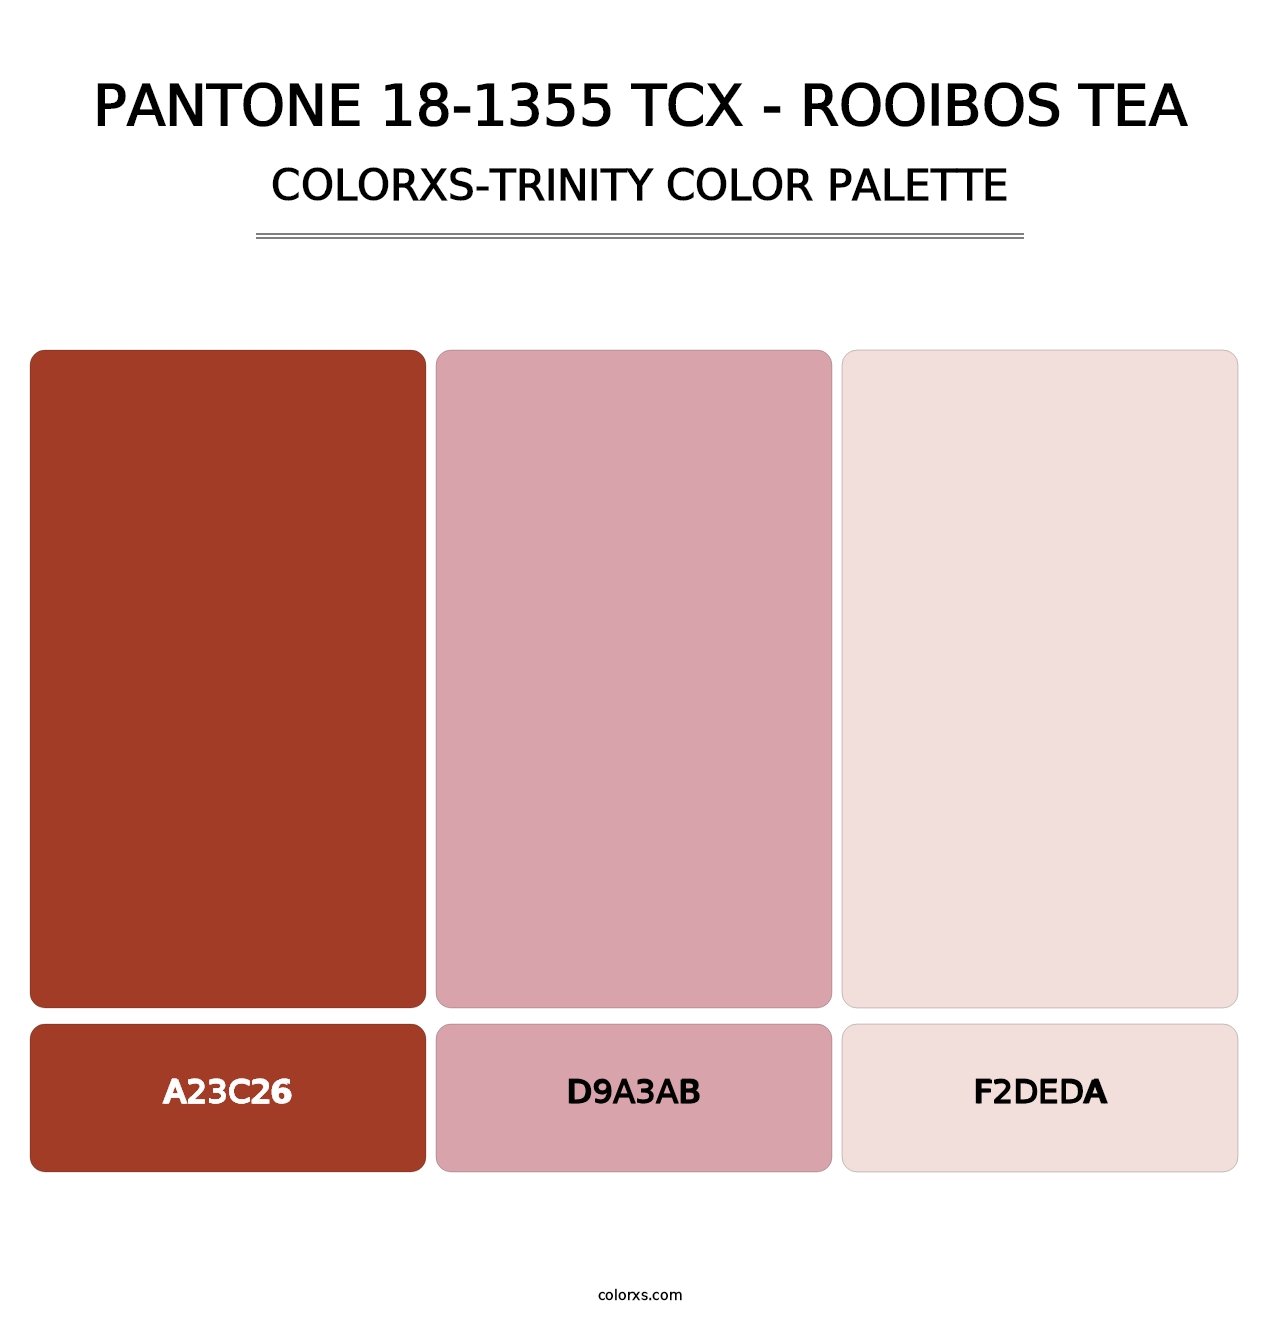 PANTONE 18-1355 TCX - Rooibos Tea - Colorxs Trinity Palette